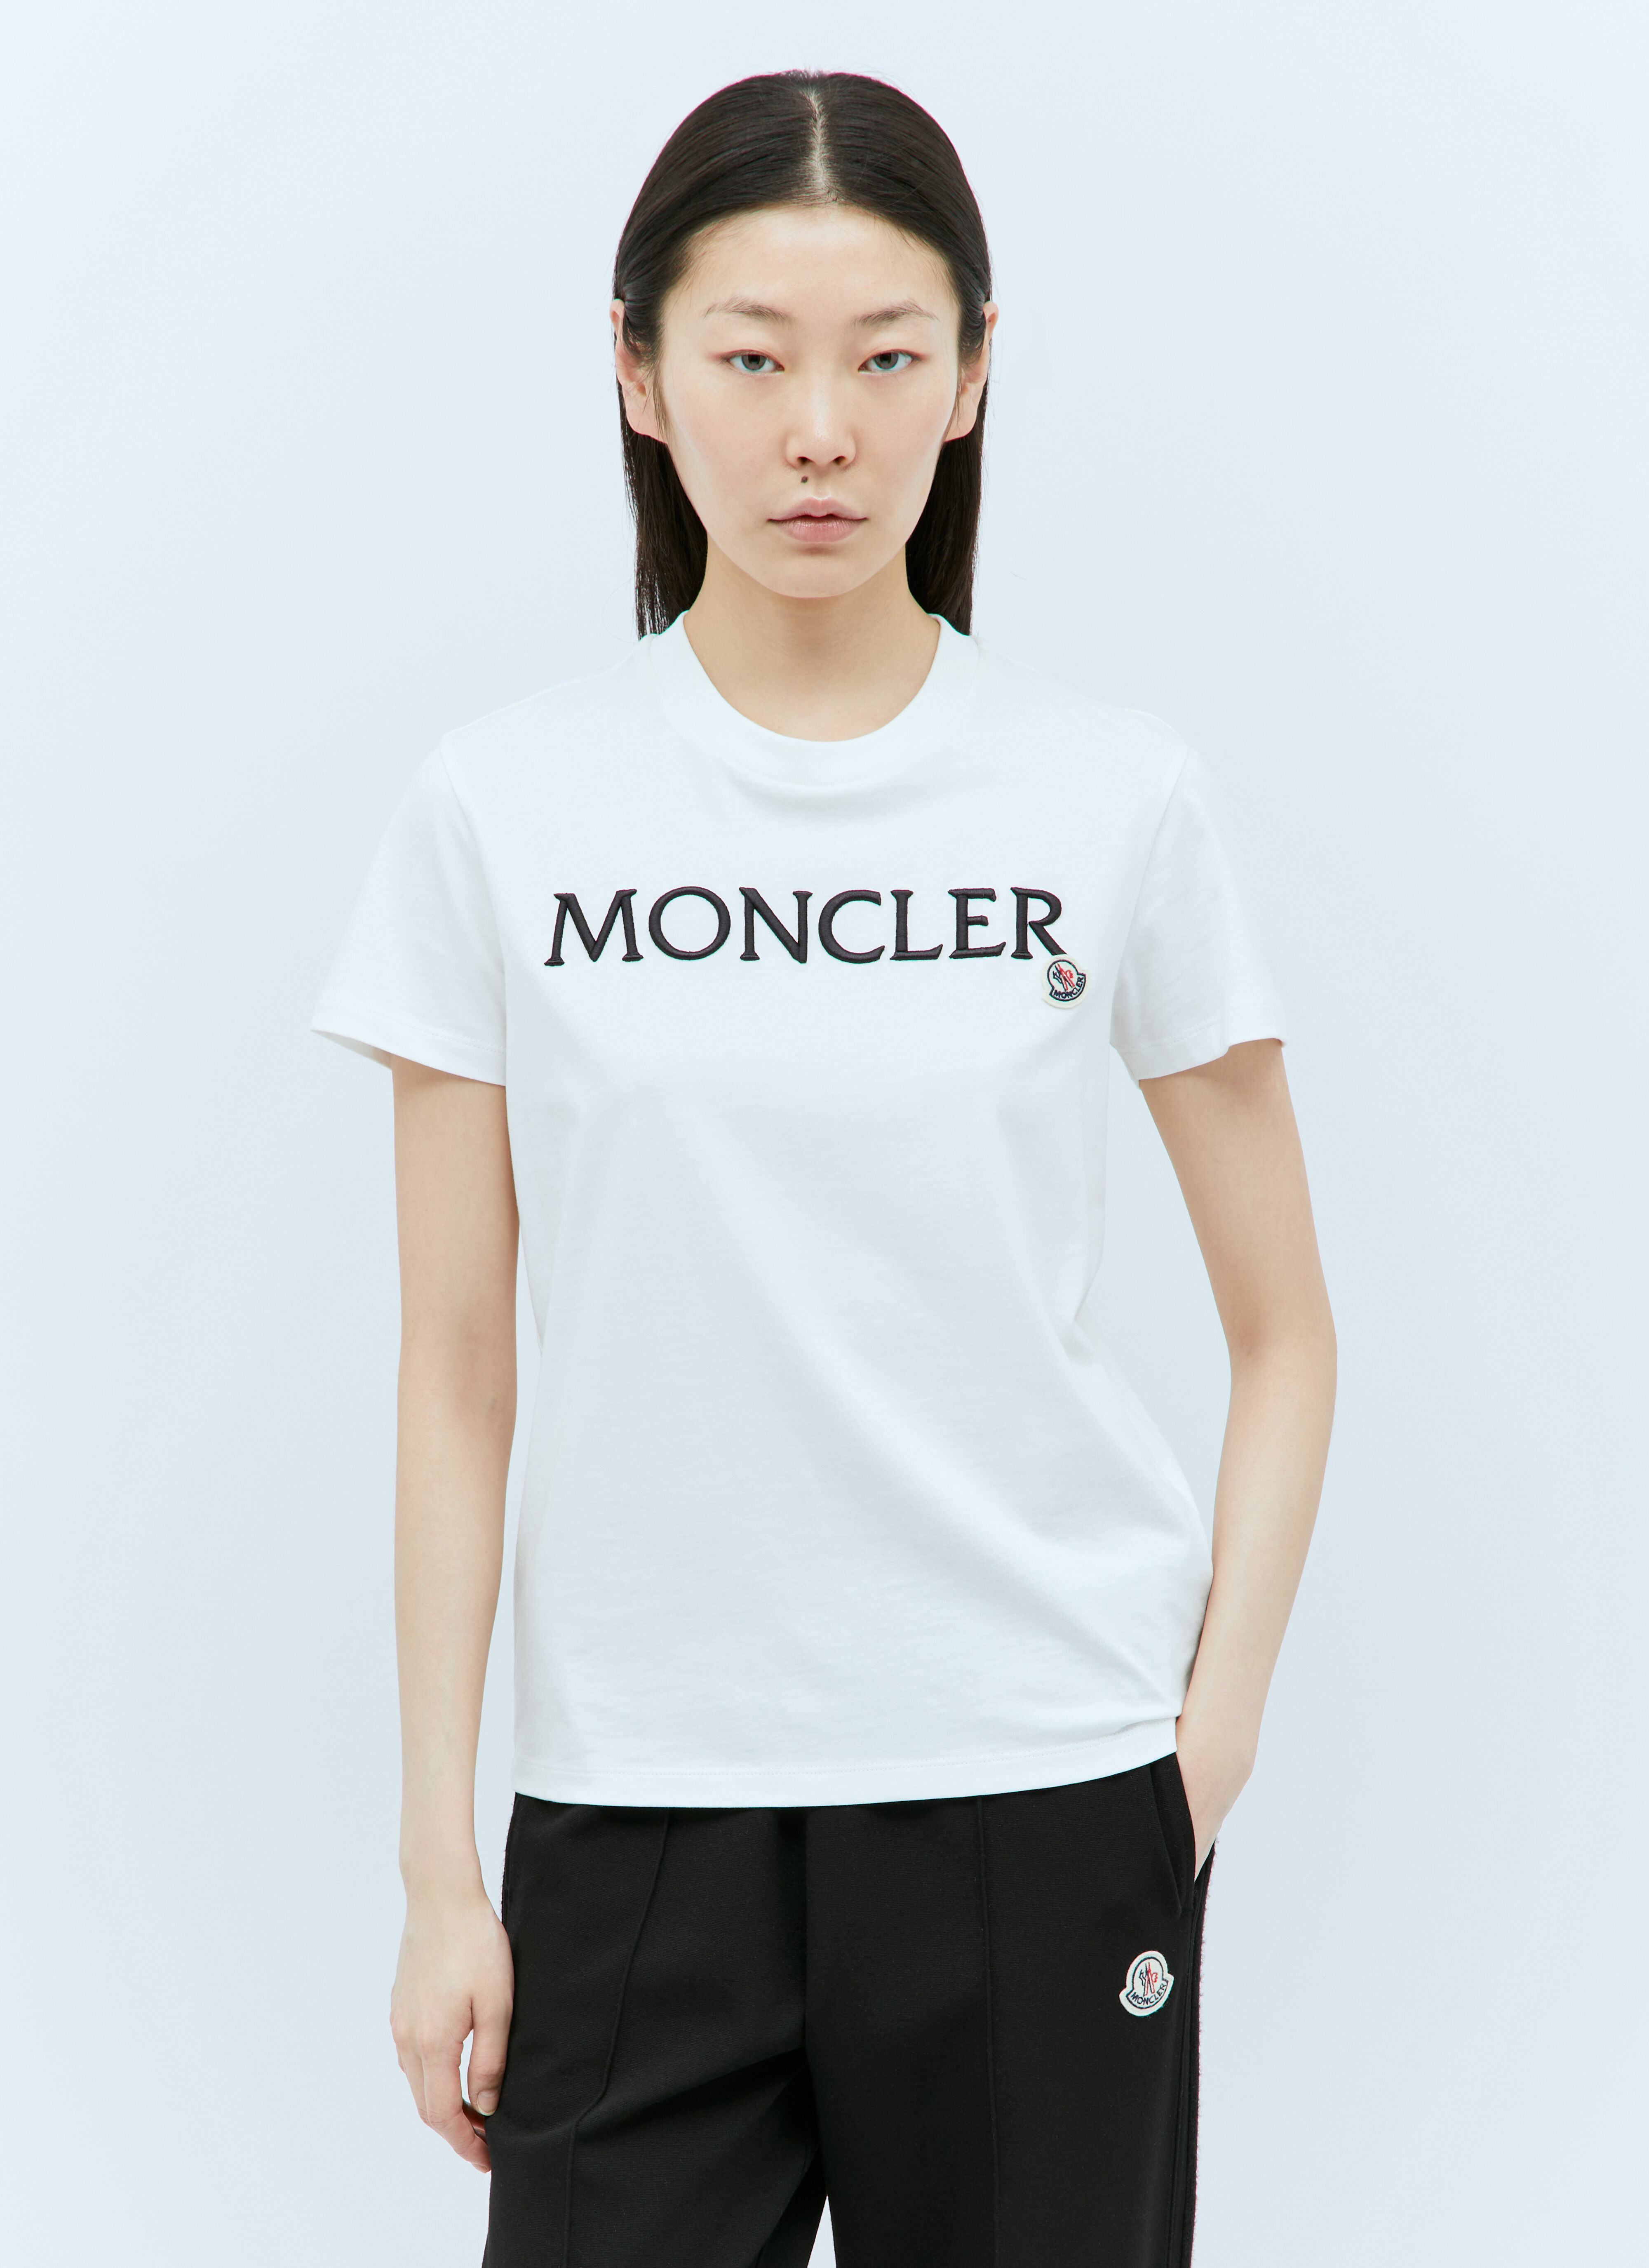 Jean Paul Gaultier Logo Patch T-Shirt White jpg0258020